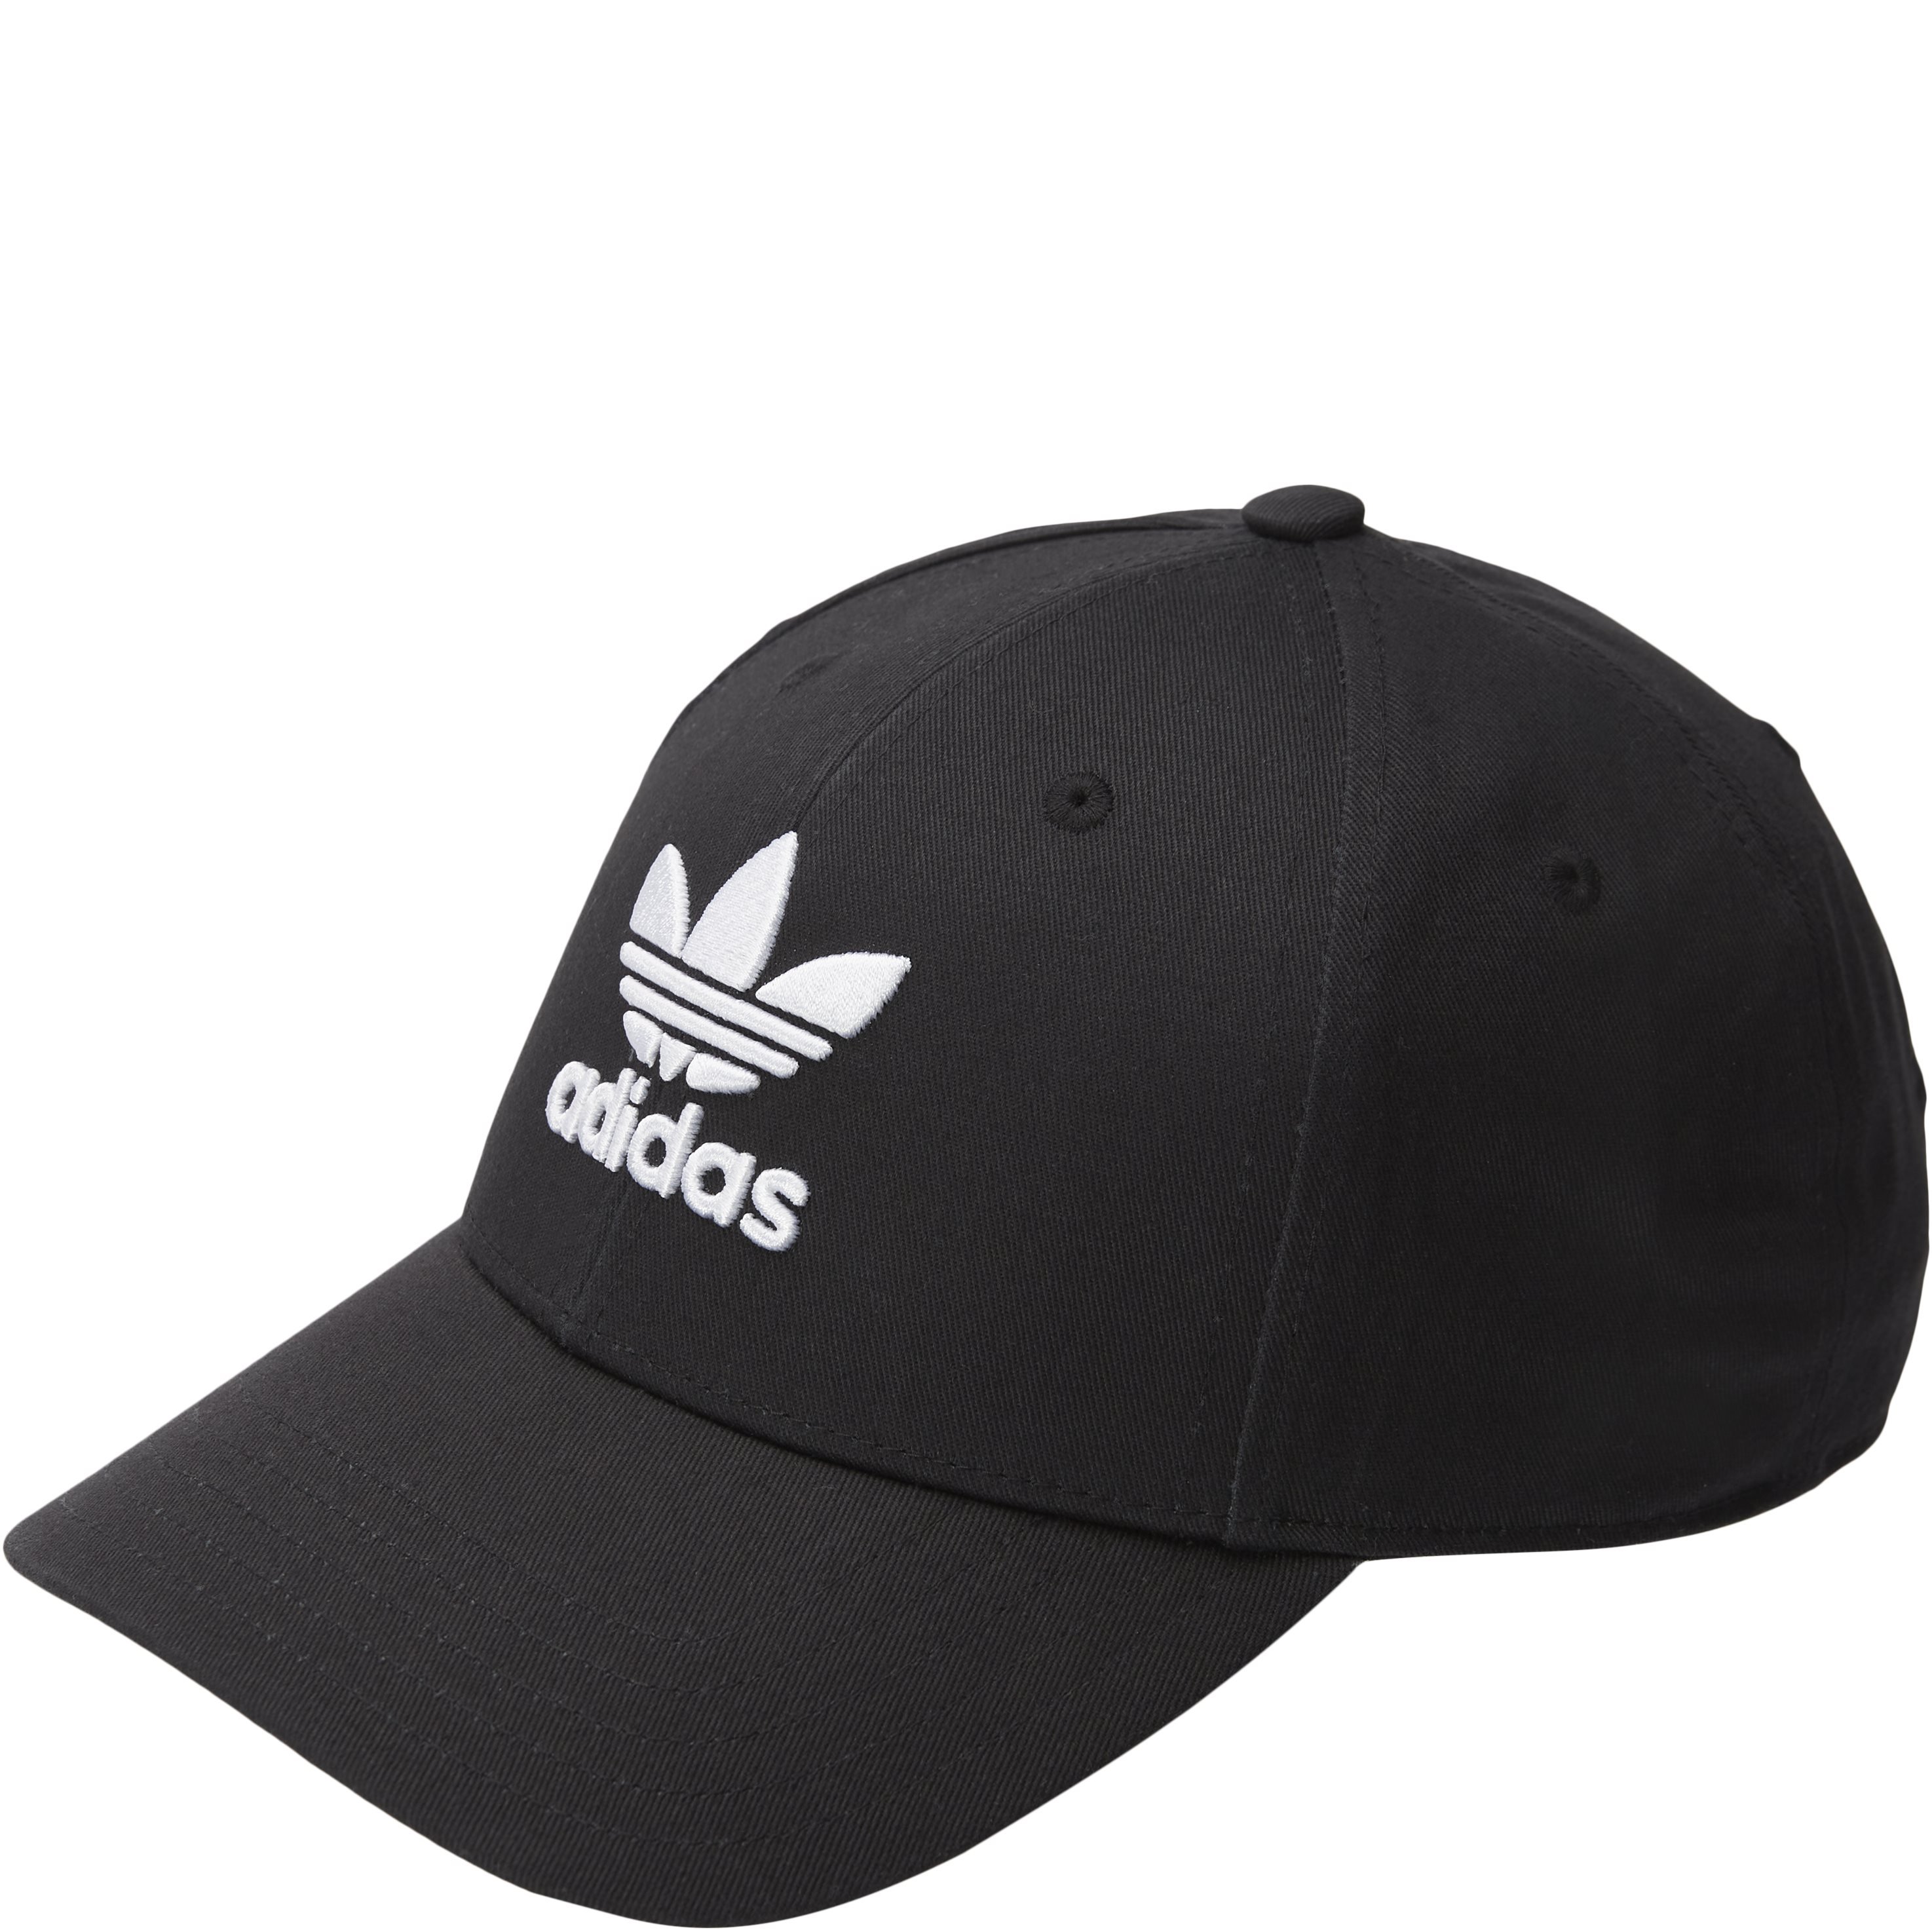 Baseball Cap - Caps - Black